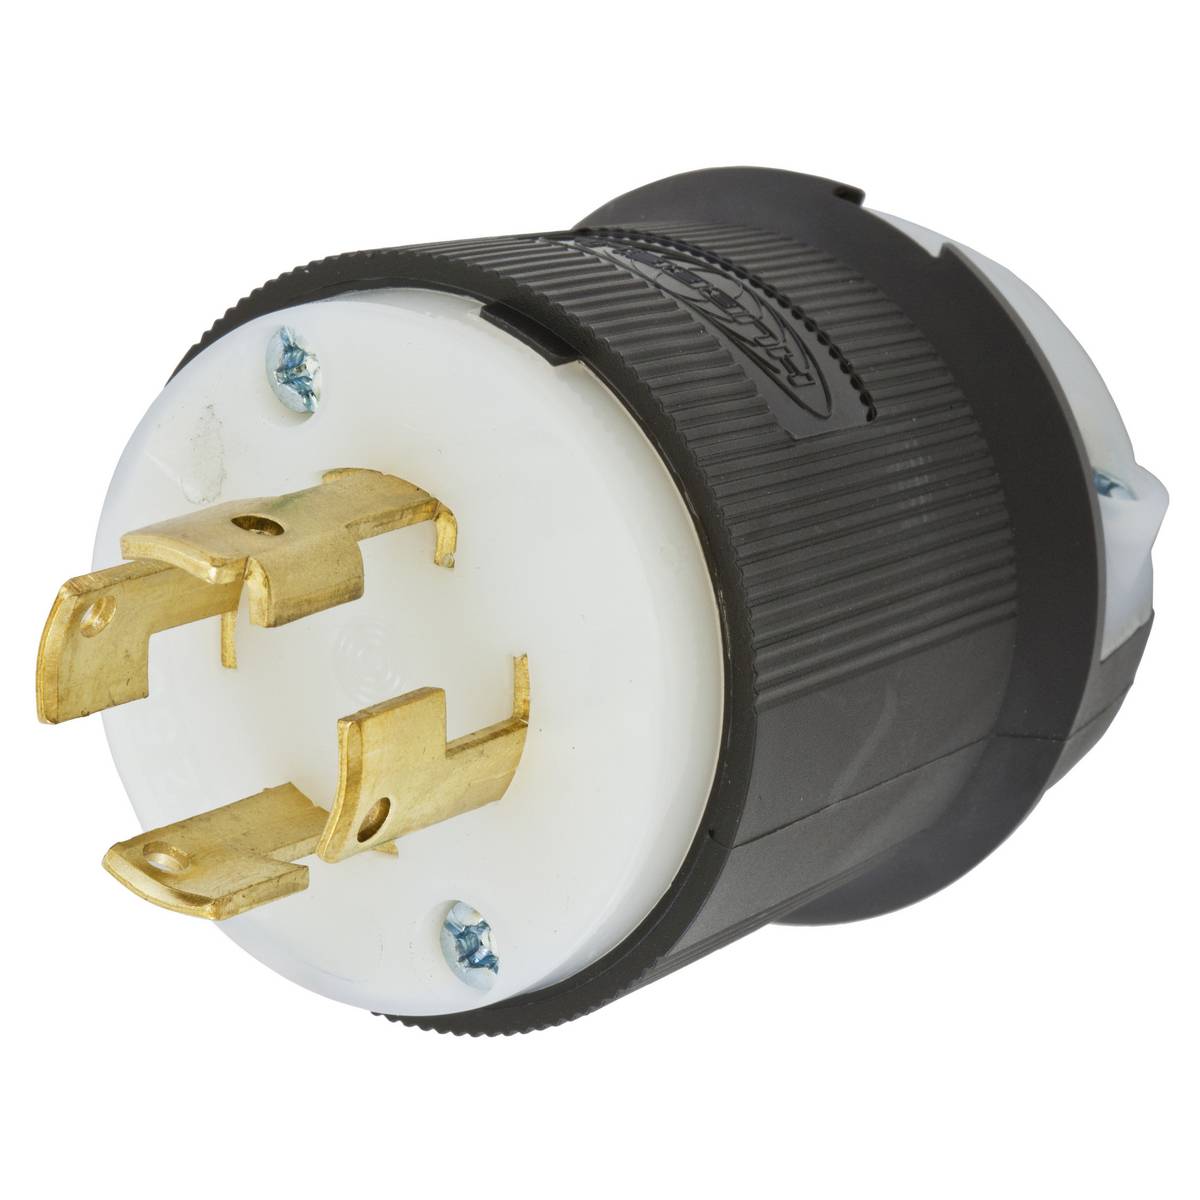 Wiring Device-Kellems Twist-Lock® Insulgrip® HBL3431GCB 3-Phase Grounding Cord Mount Locking Plug, 250 VAC, 30 A, 3 Poles, 4 Wires, Black/White